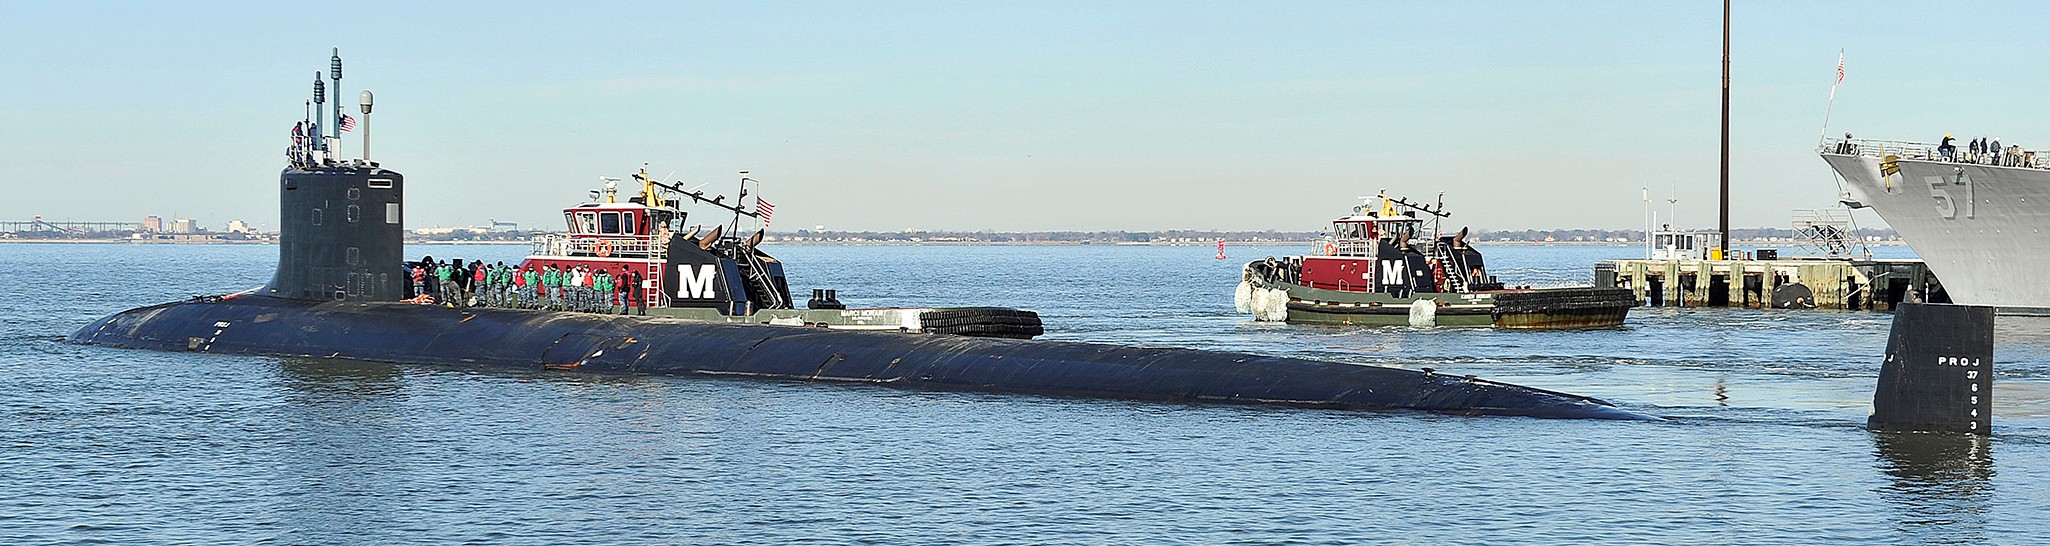 ssn-783 uss minnesota virginia class attack submarine us navy 03 naval station norfolk virginia